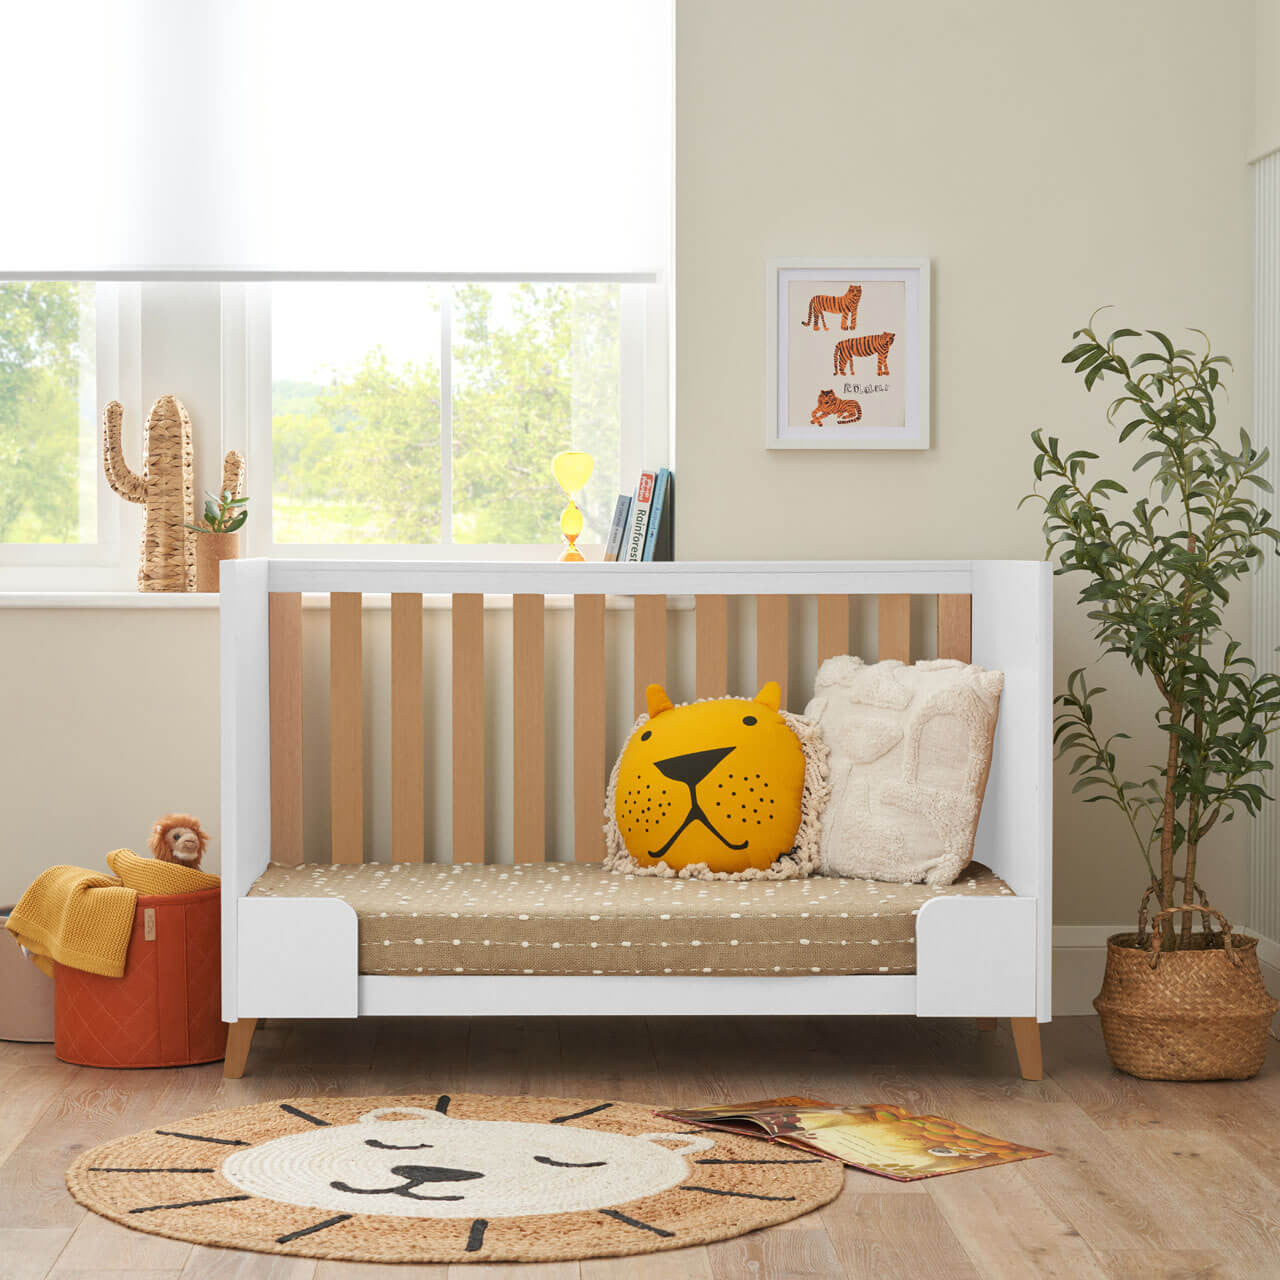 Tutti Bambini Fika Mini Cot Bed - White/Light Oak -  | For Your Little One